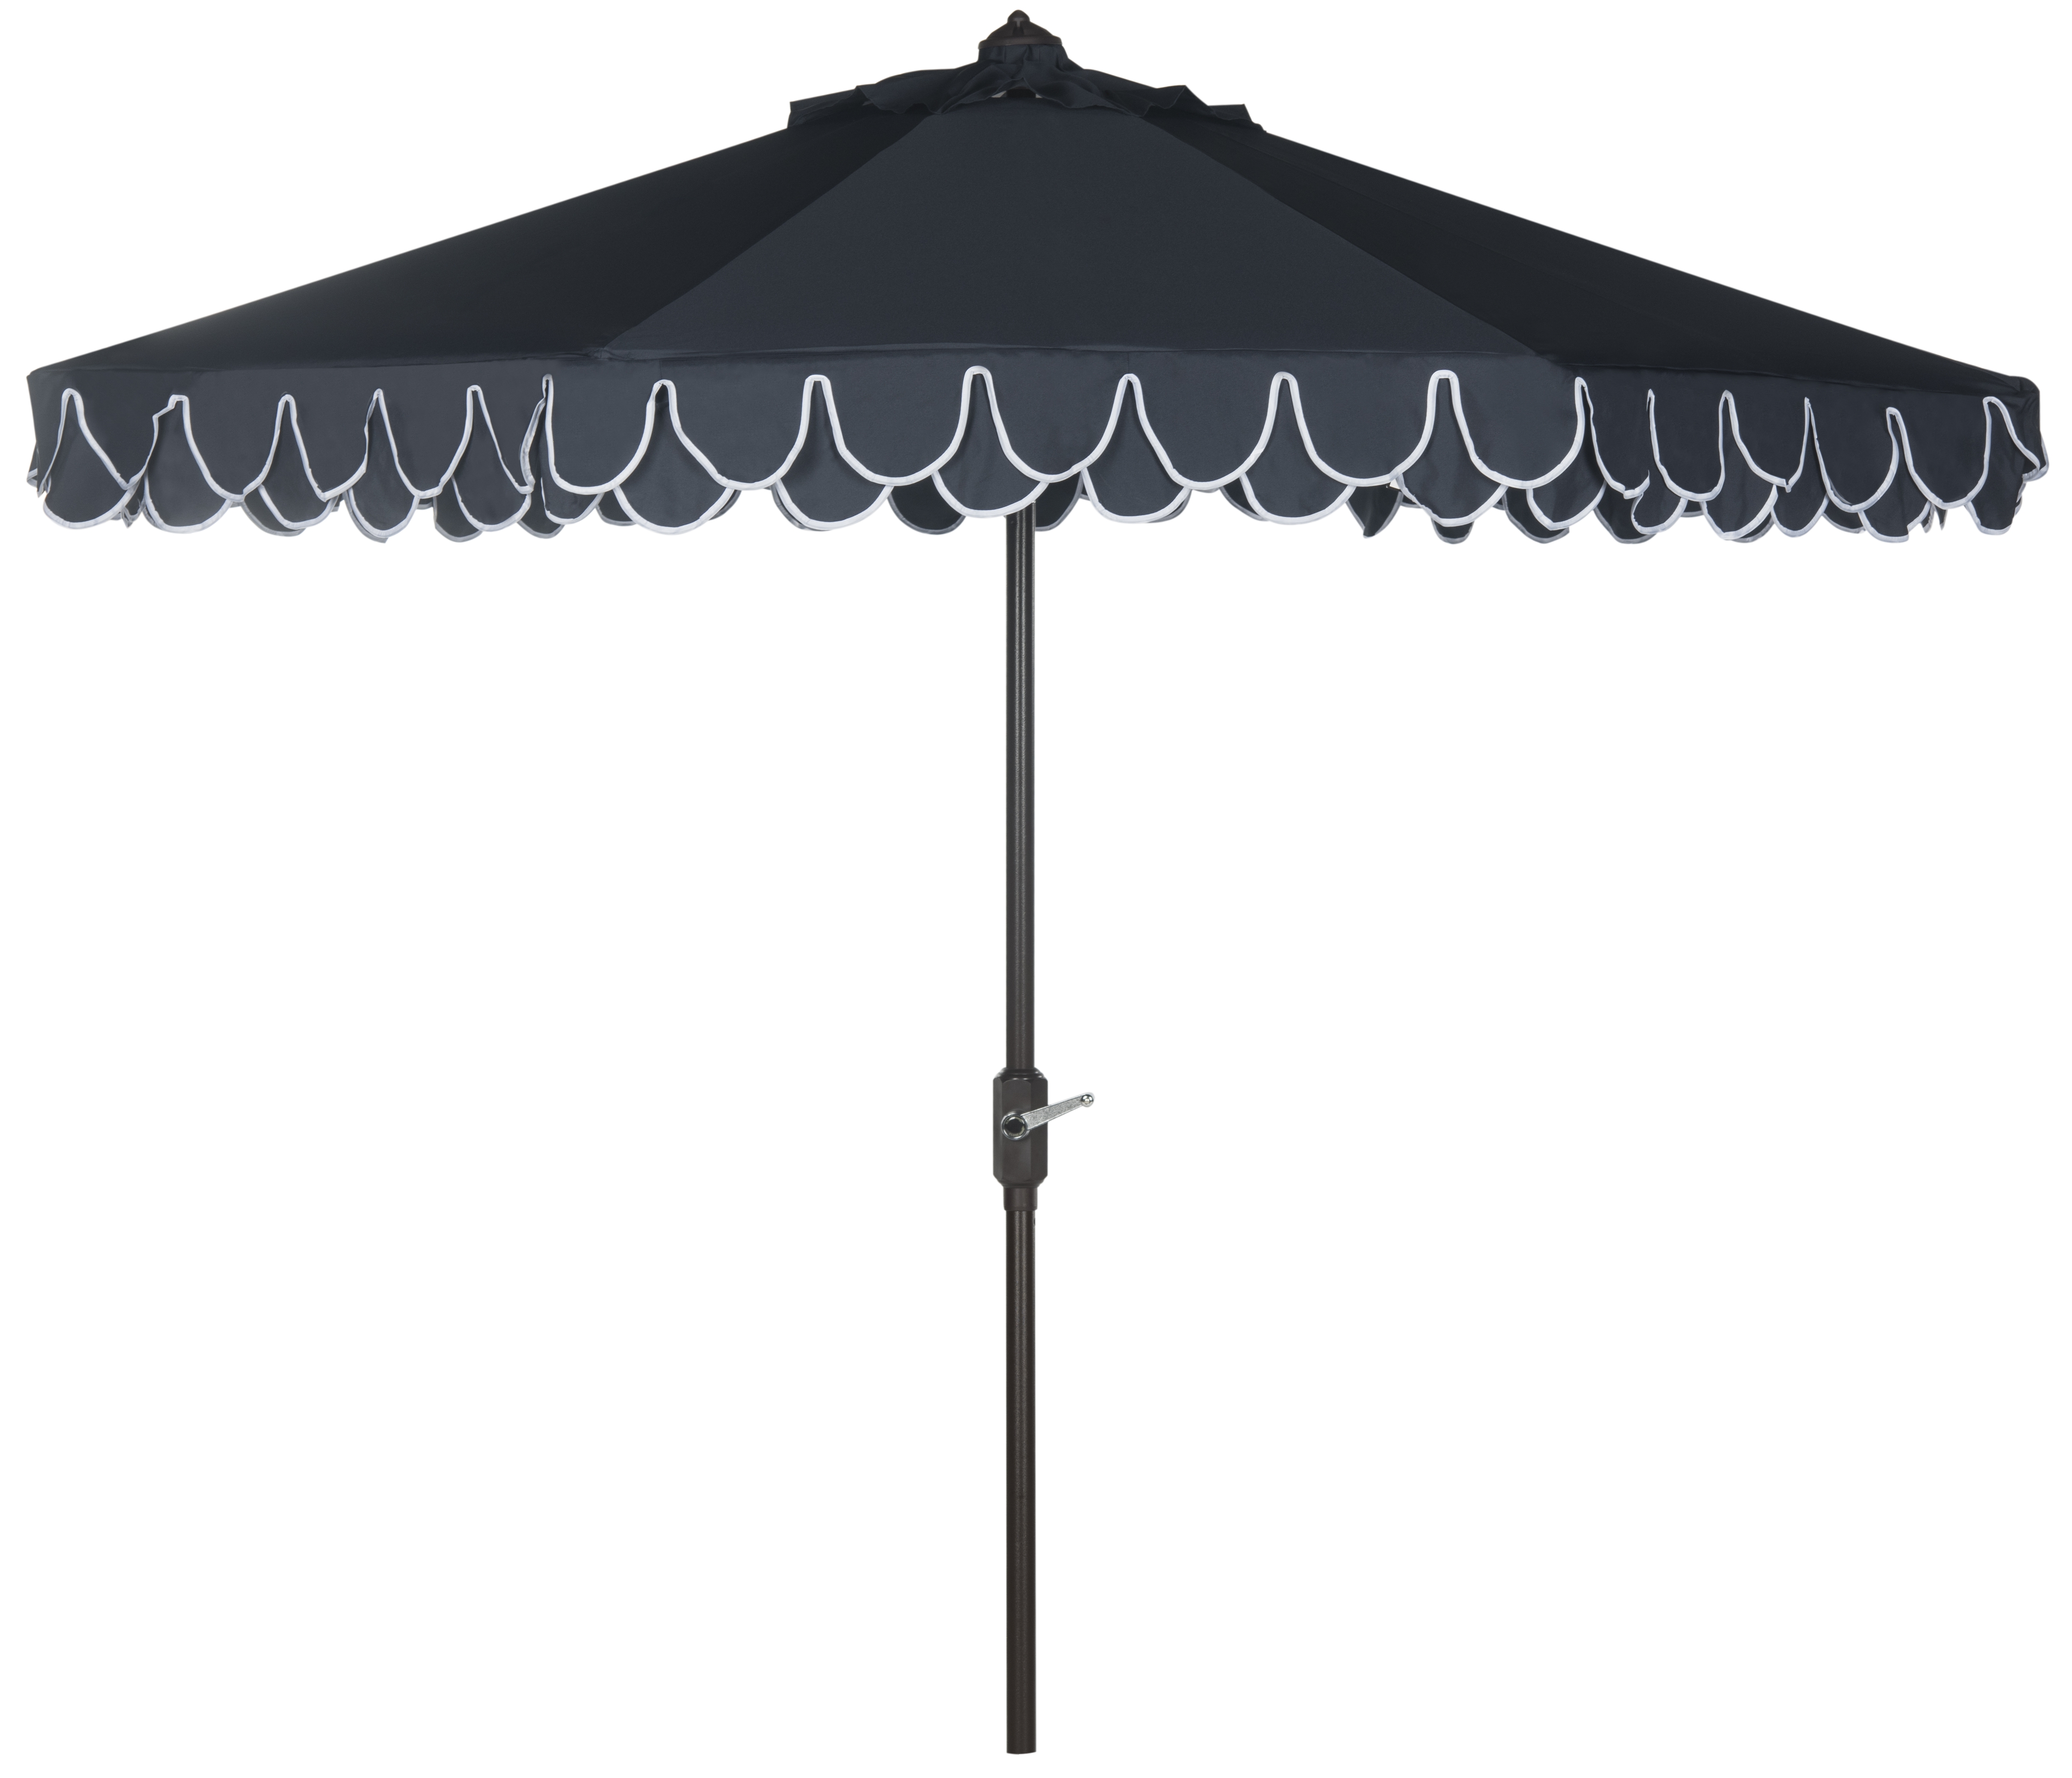 Uv Resistant Elegant Valance 9Ft Auto Tilt Umbrella - Navy/White - Arlo Home - Image 0